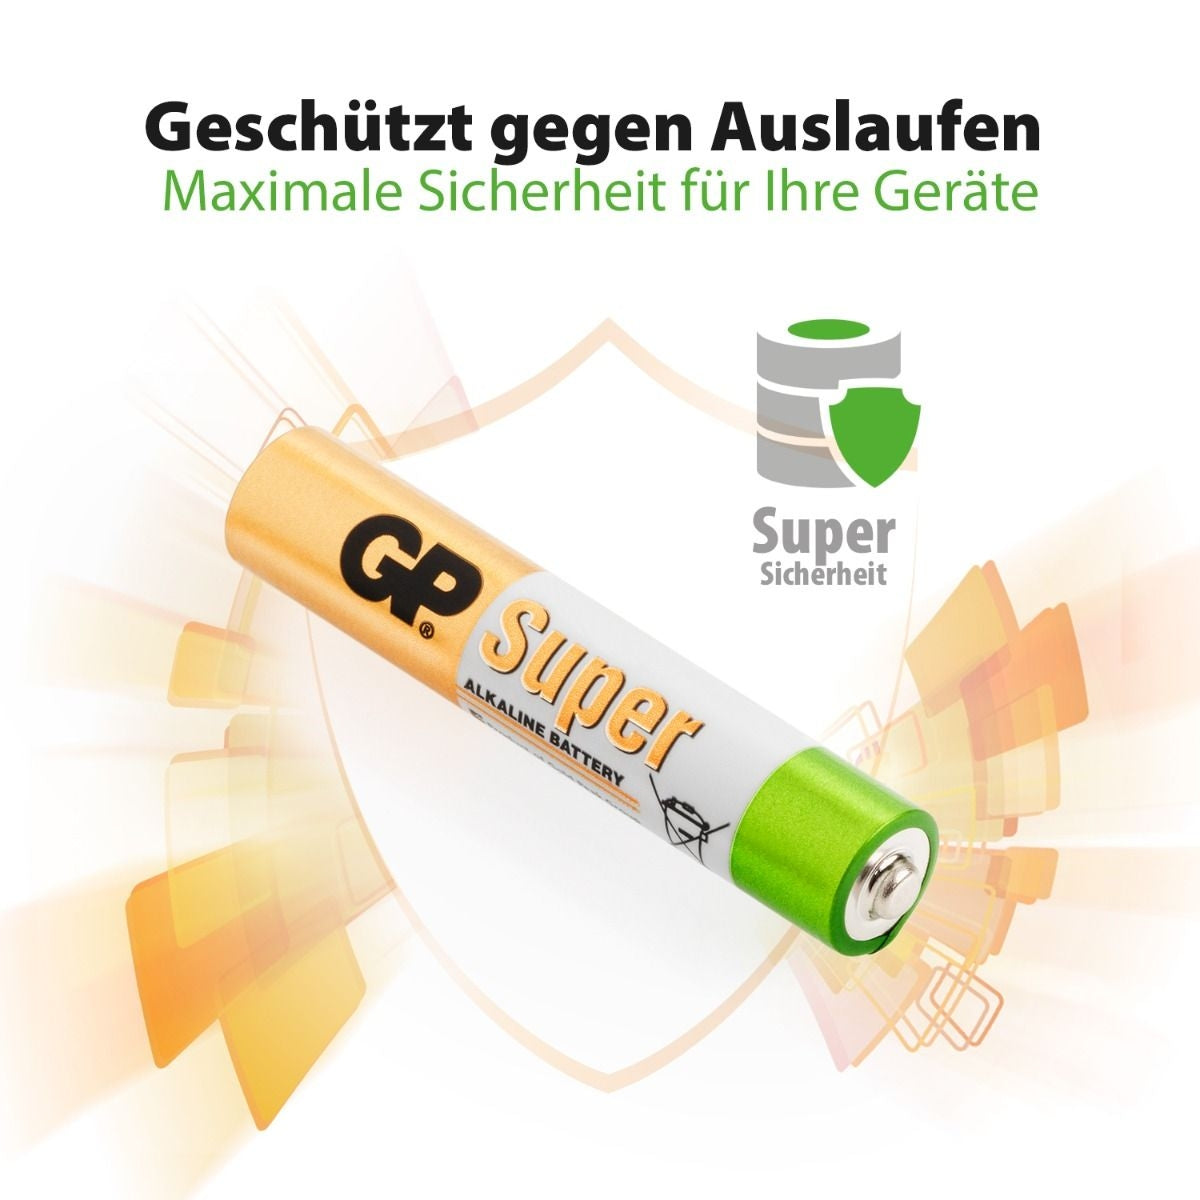 2 x GP Super Alkaline AAAA - 2 Batterien 1,5V